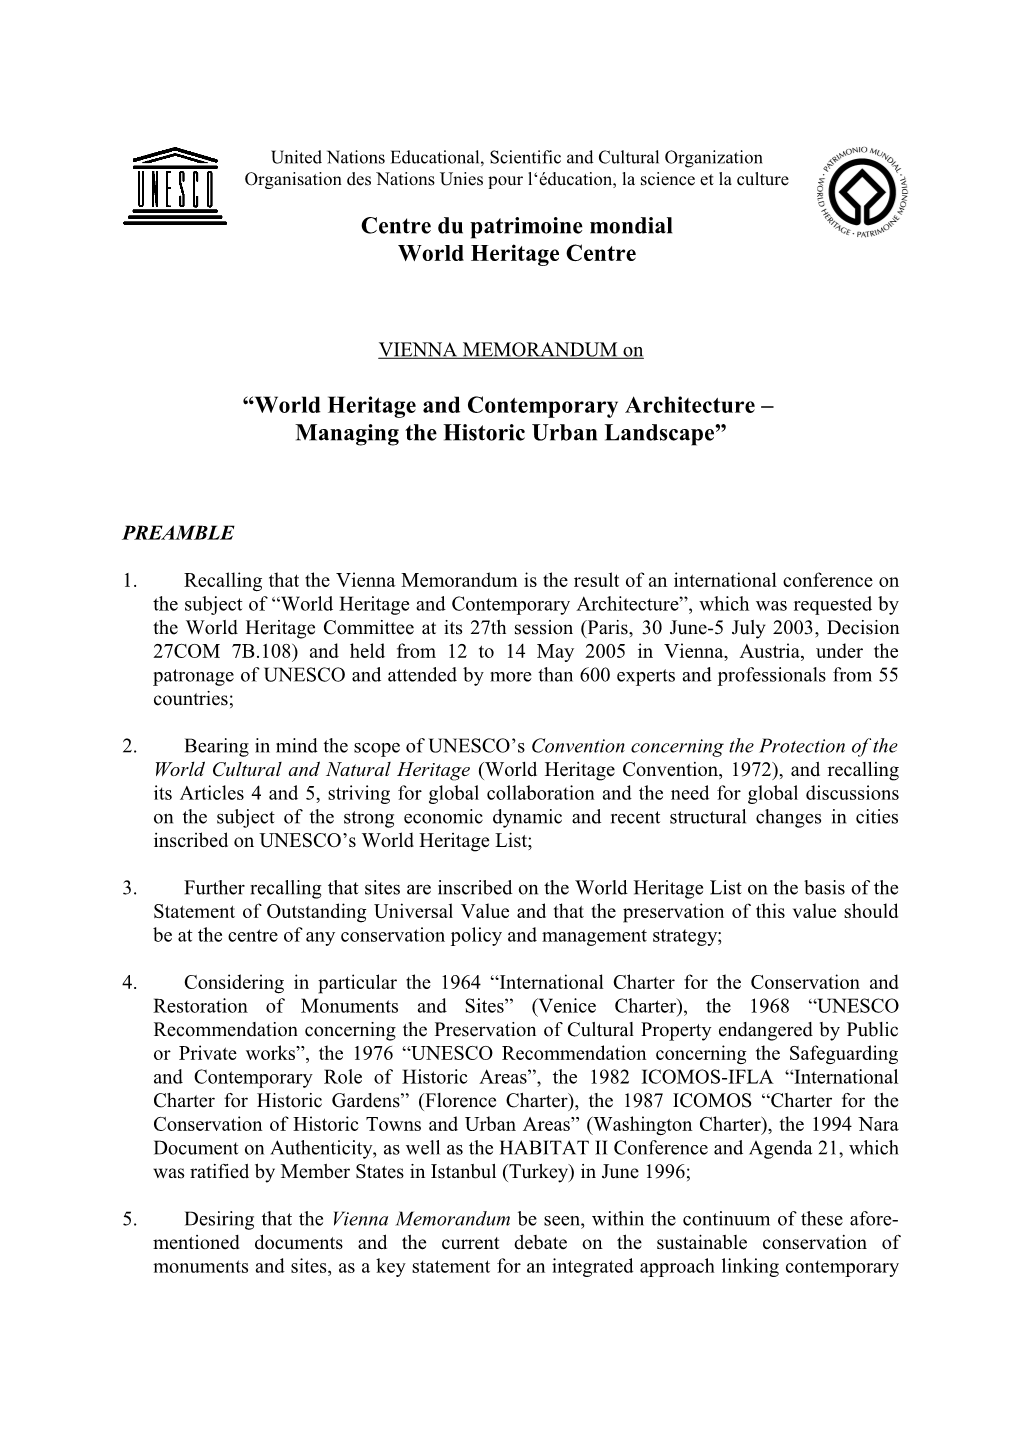 Vienna Memorandum on the World Heritage and Contemporary Architecture - Managing the Historic